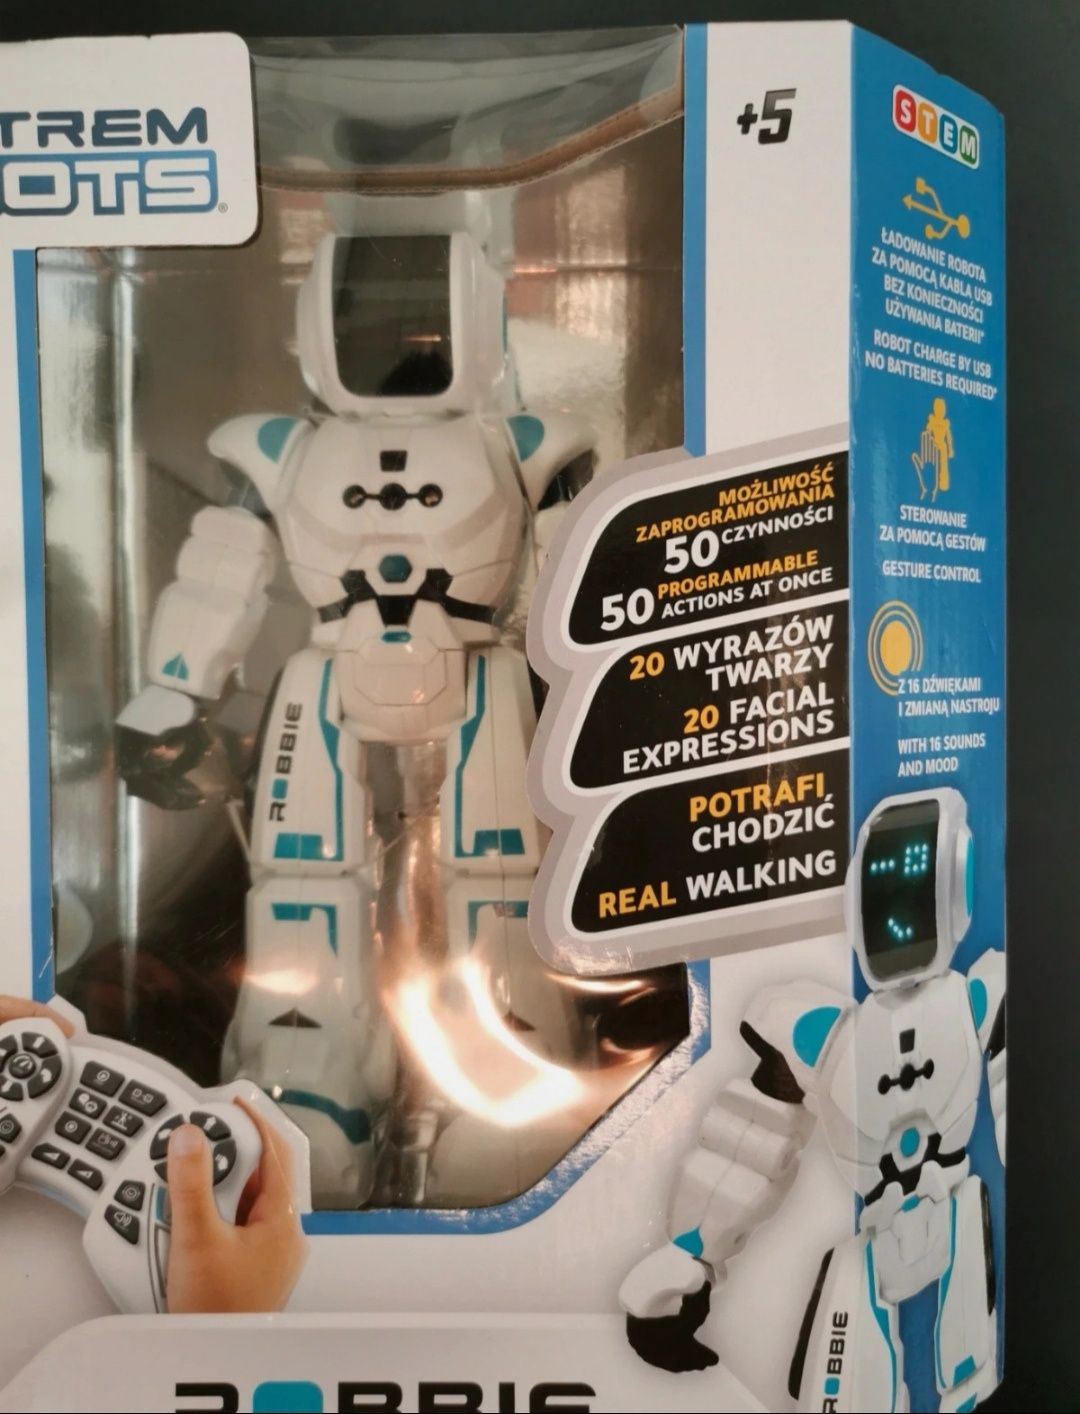 Xtrem bots robot sterowany Nowy